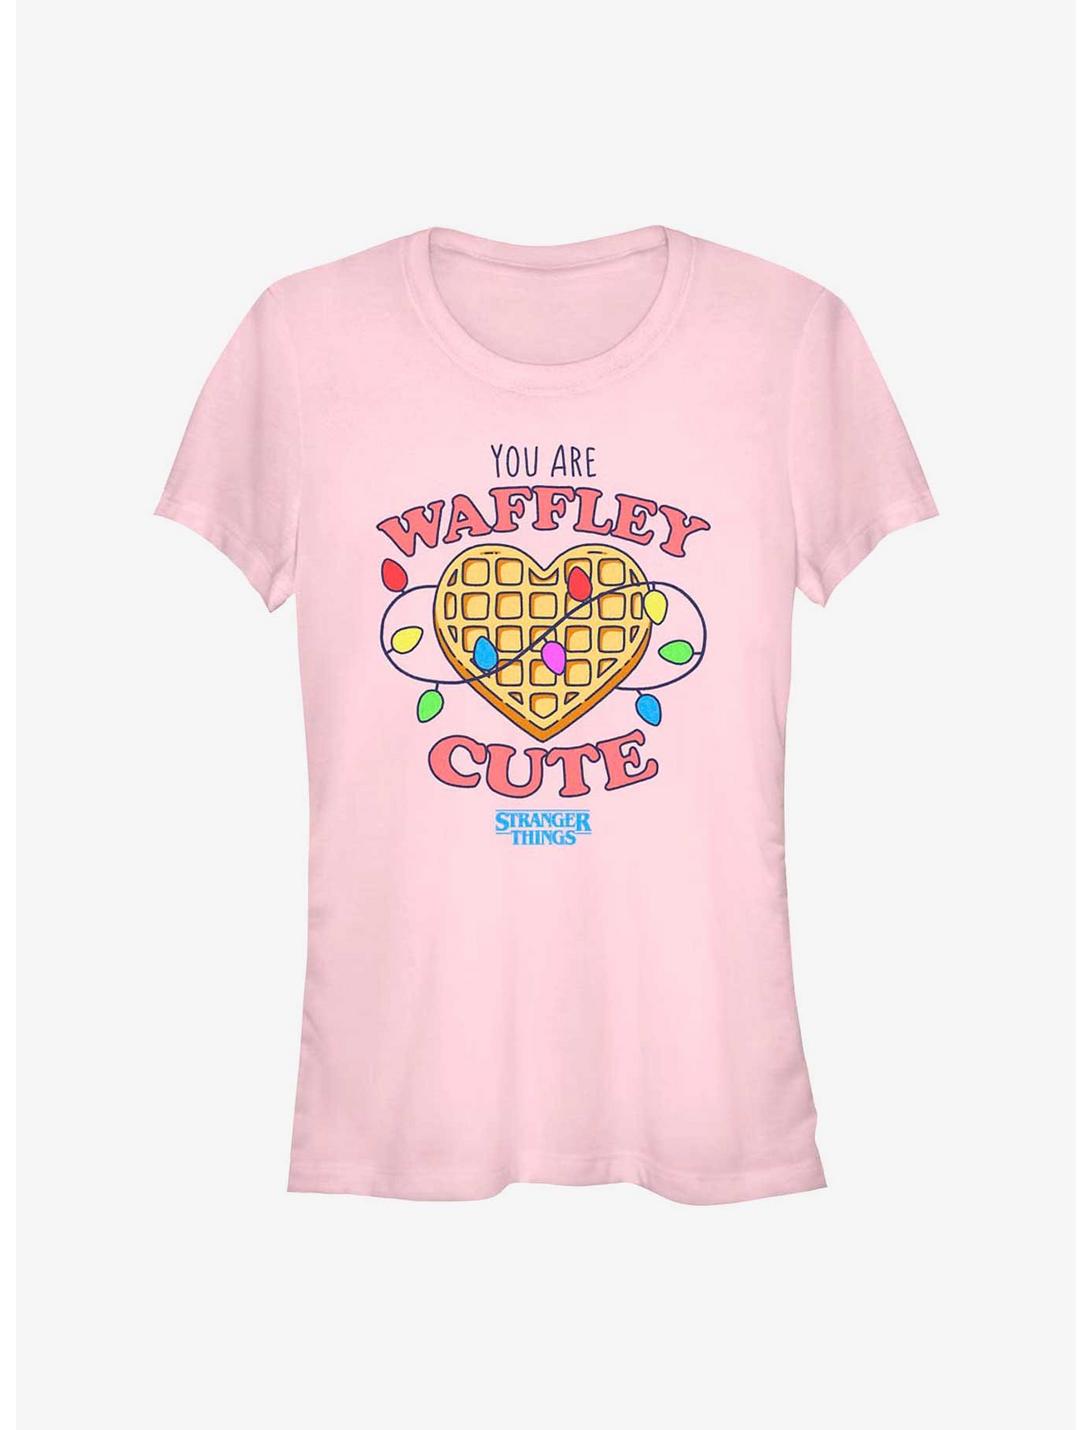 Stranger Things Heart Waffley Cute Girls T-Shirt, LIGHT PINK, hi-res